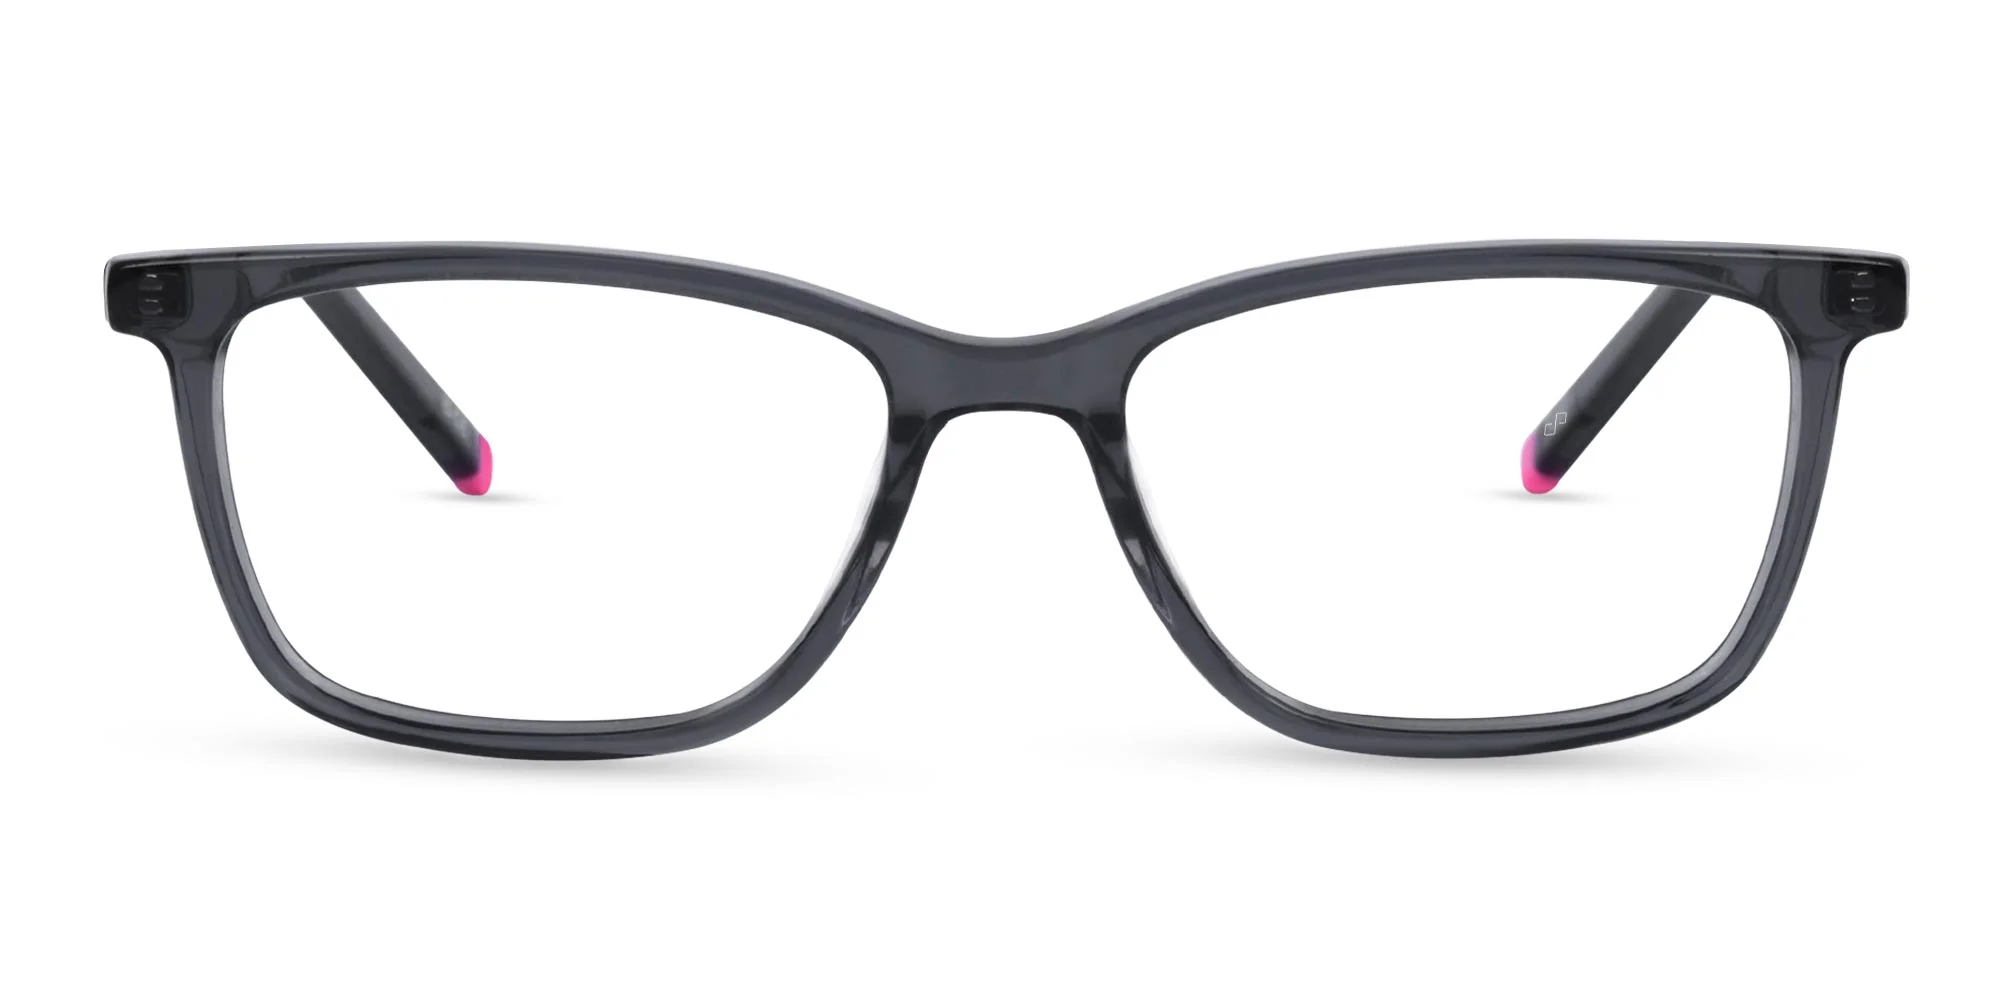 SPECSAVERS eyeglasses BLACK SQUARE glasses frame MOD: HARRY 30564152 | eBay